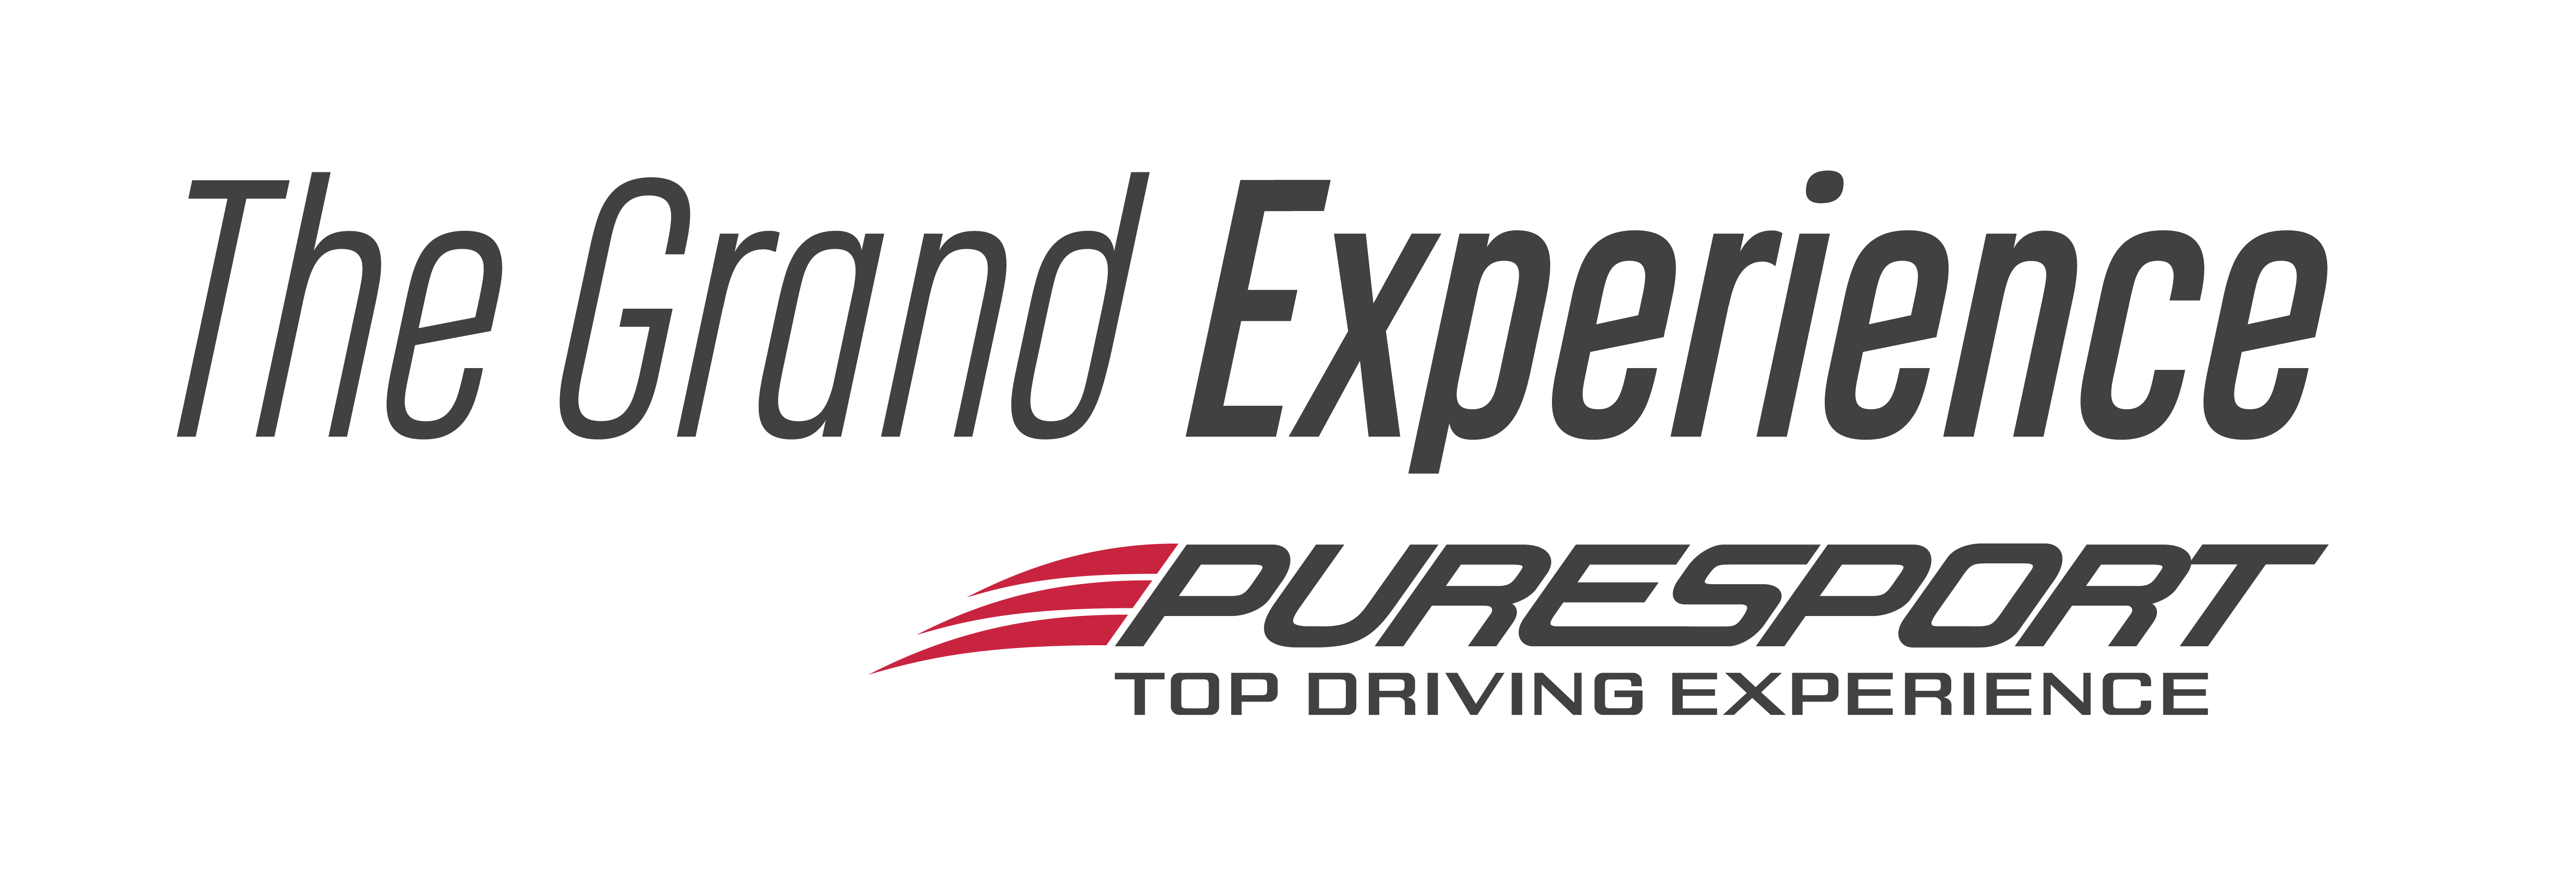 The Grand Experience von Puresport